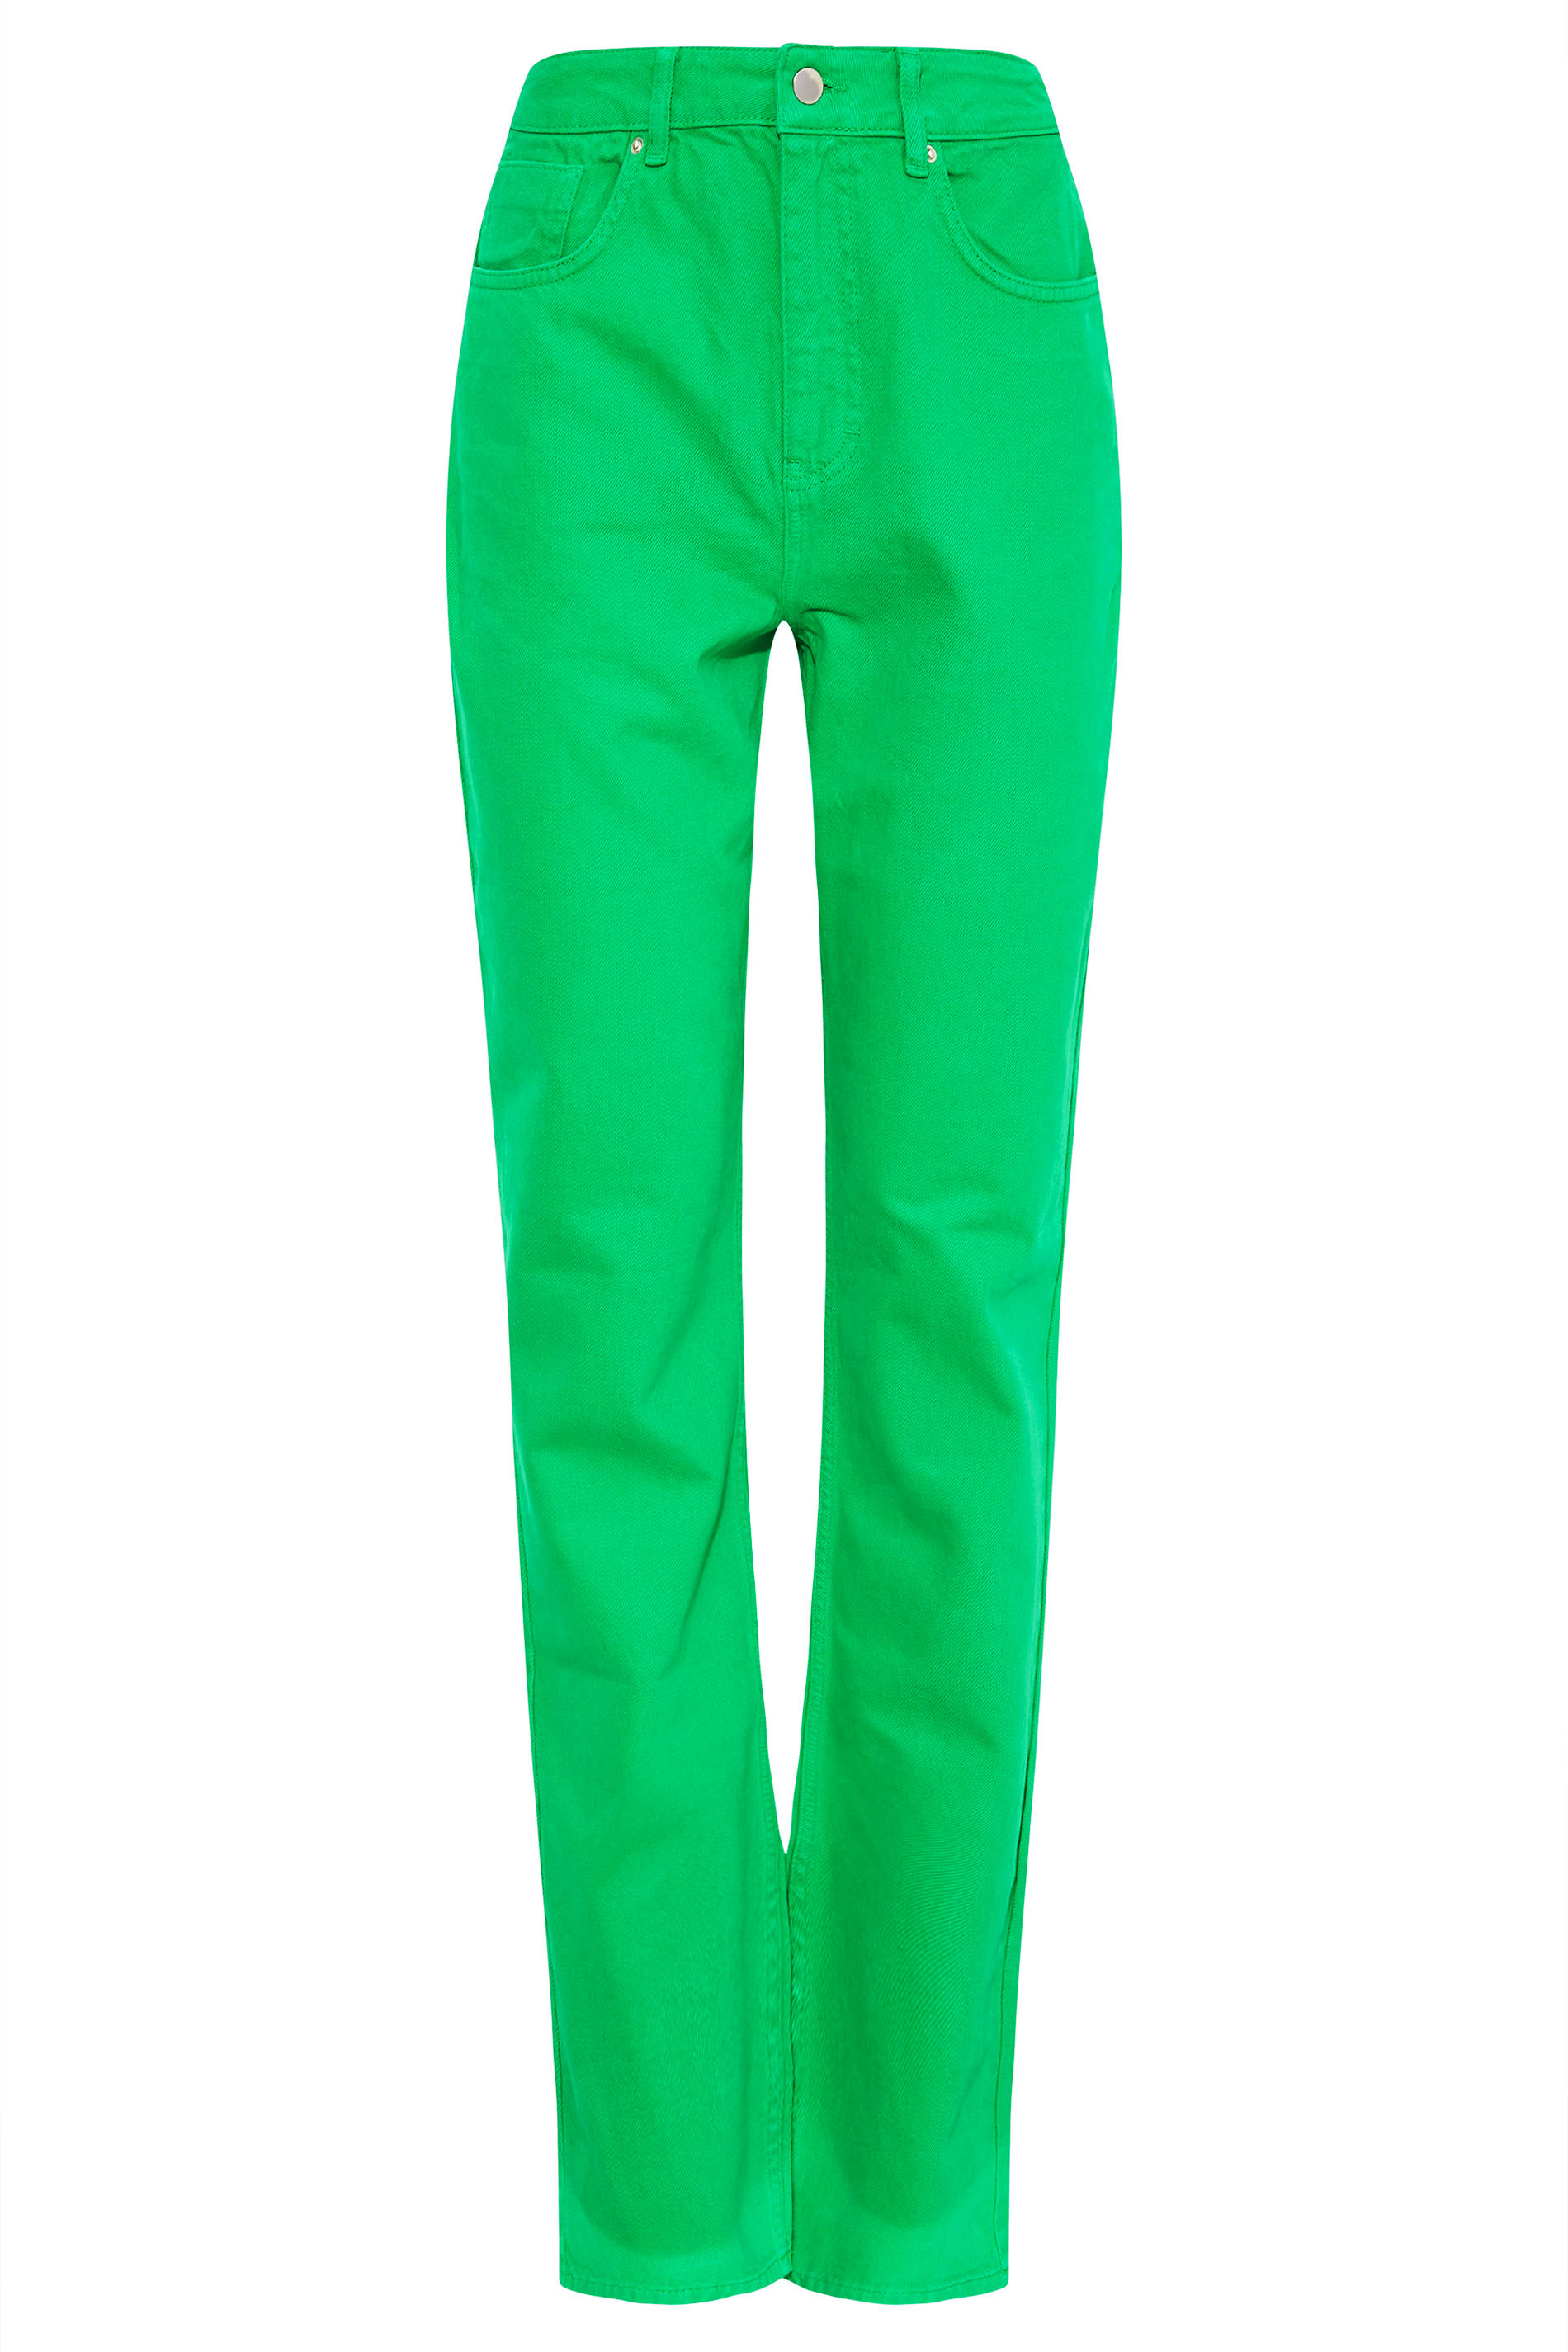 Tall Women's Bright Green Mom Jeans | Long Tall Sally